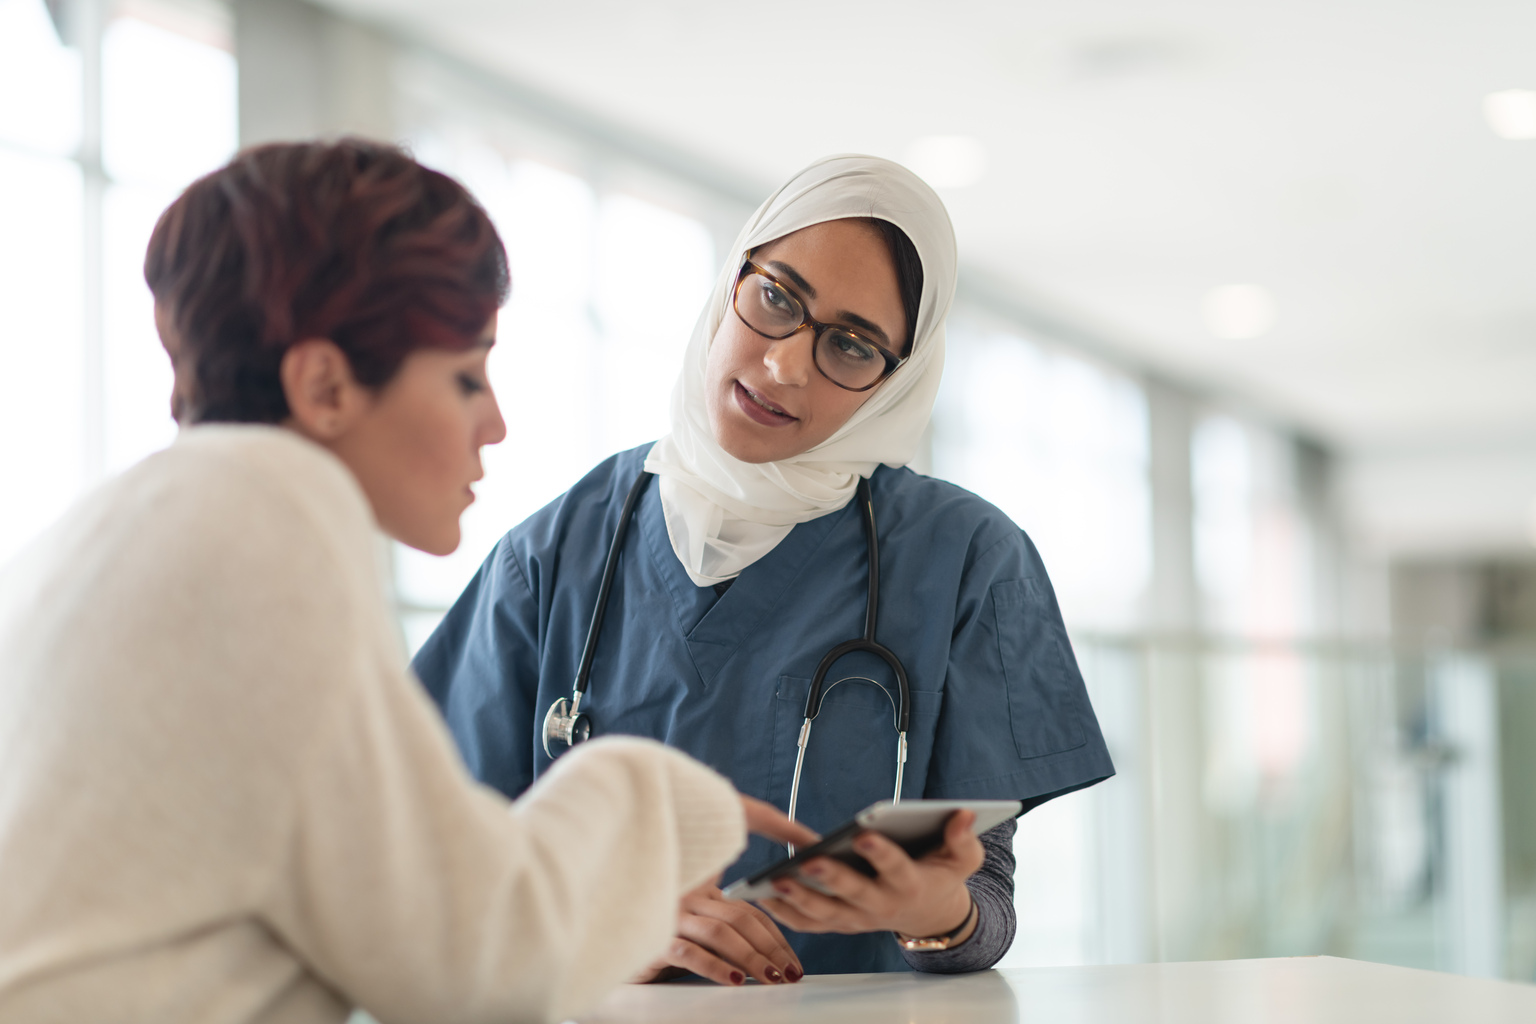 Muslim surgeon consults female patient.